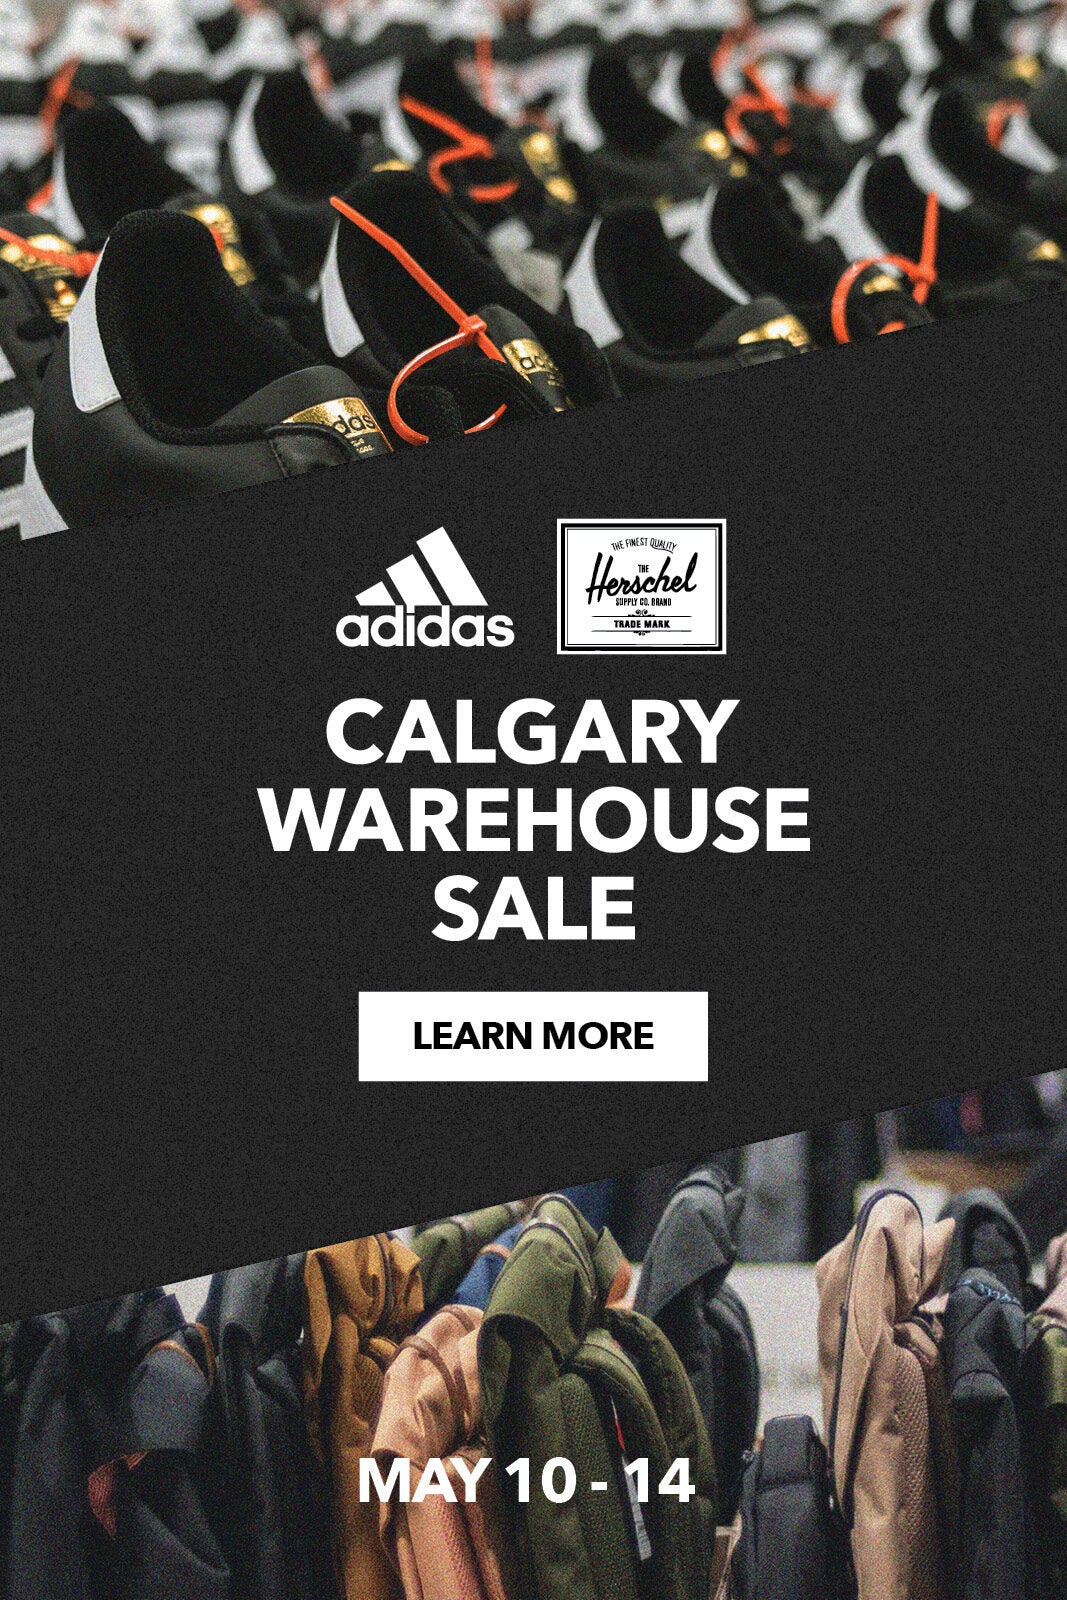 Adidas, Herschel] (CALGARY) & Warehouse Sale - RedFlagDeals.com Forums